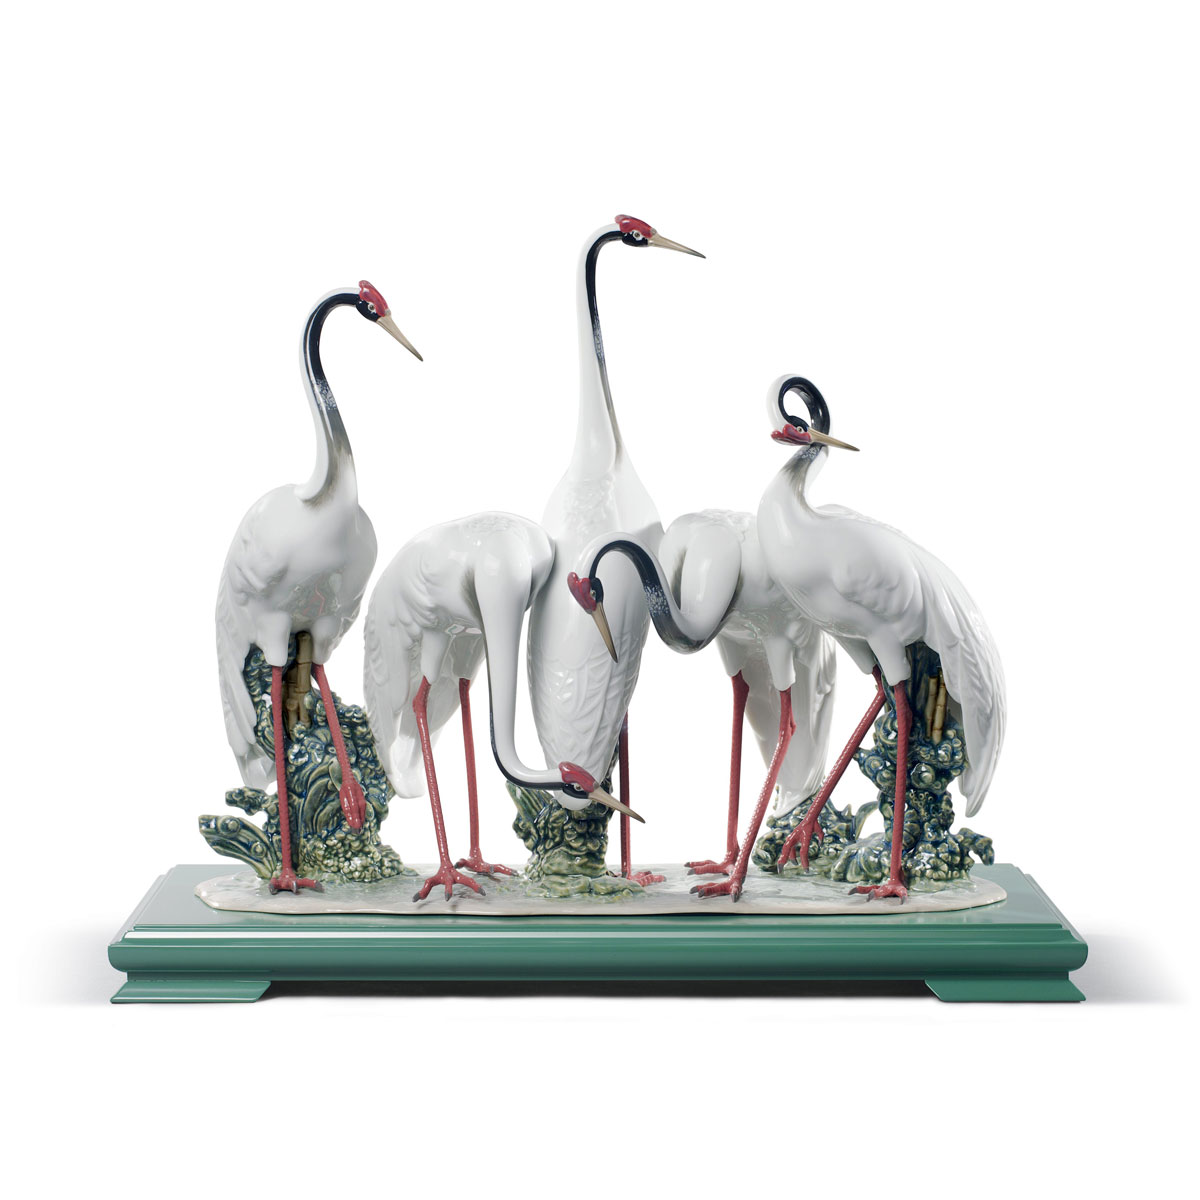 Lladro Classic Sculpture, Flock Of Cranes Sculpture. Limited Edition